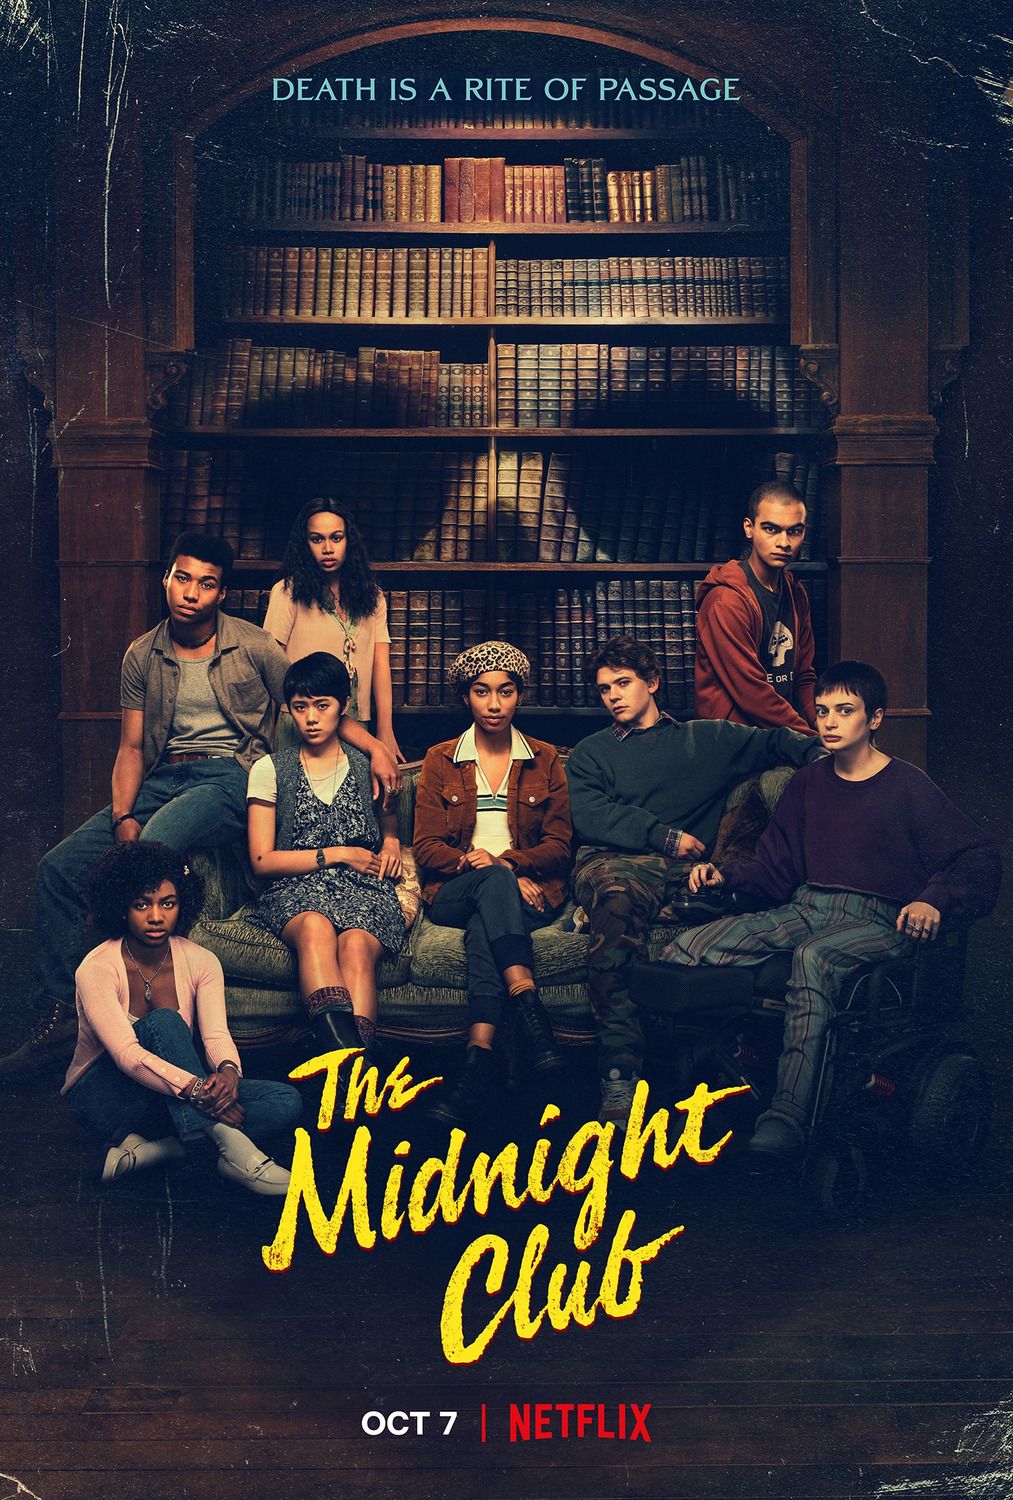 The Midnight Club Netflix Poster